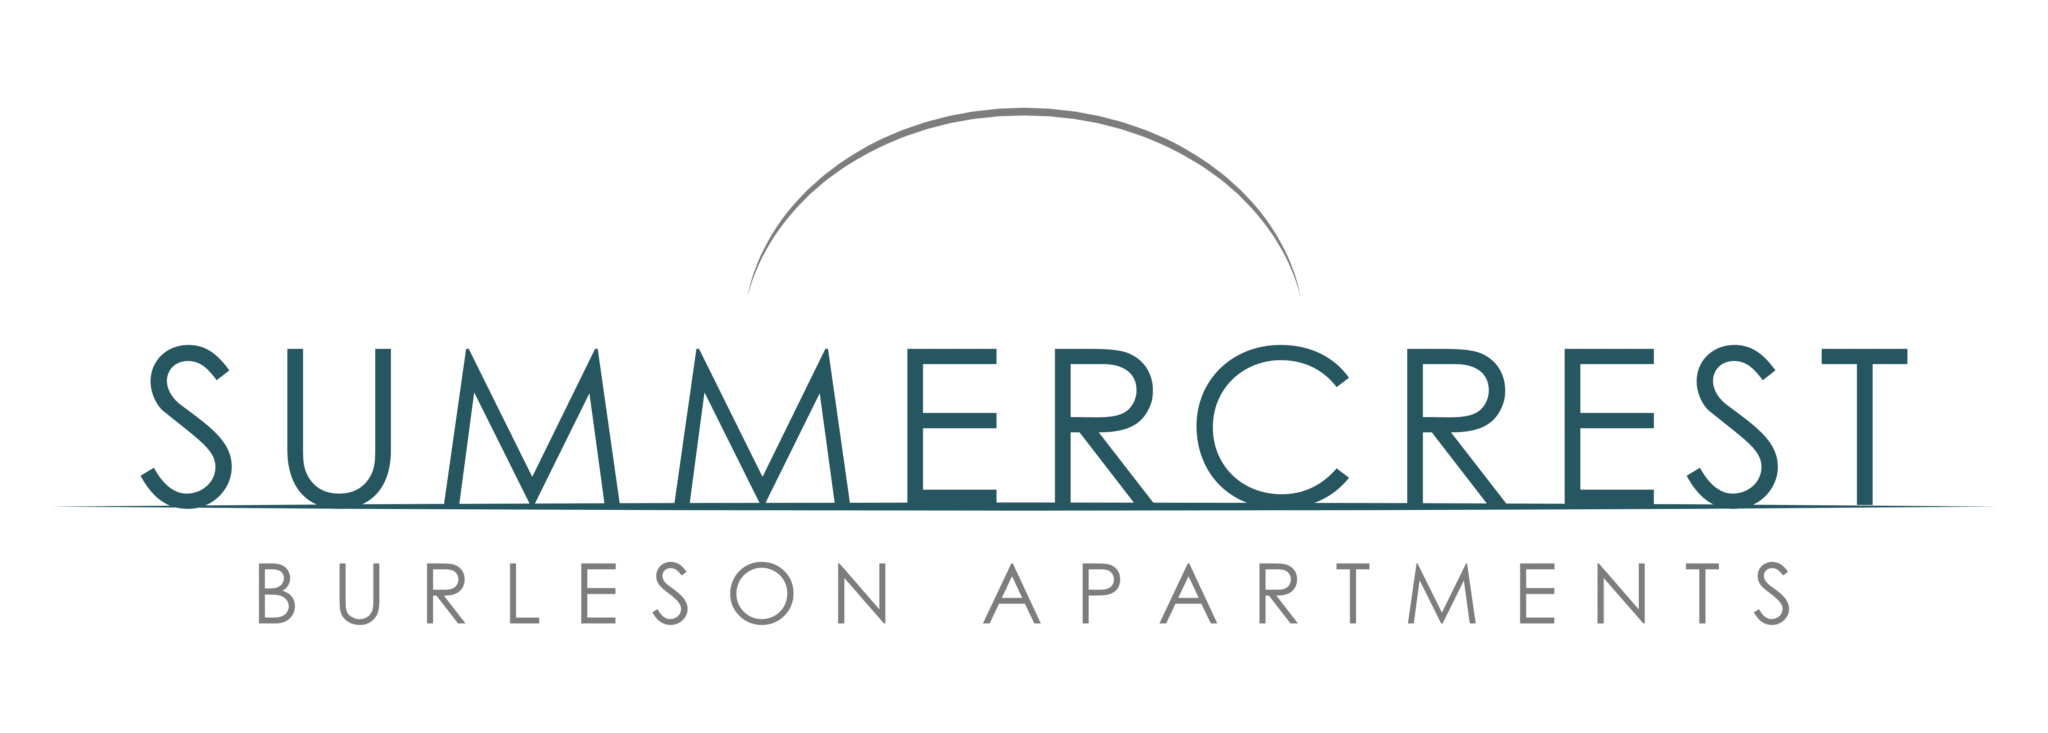 Summercrest Burleson Apartments Logo